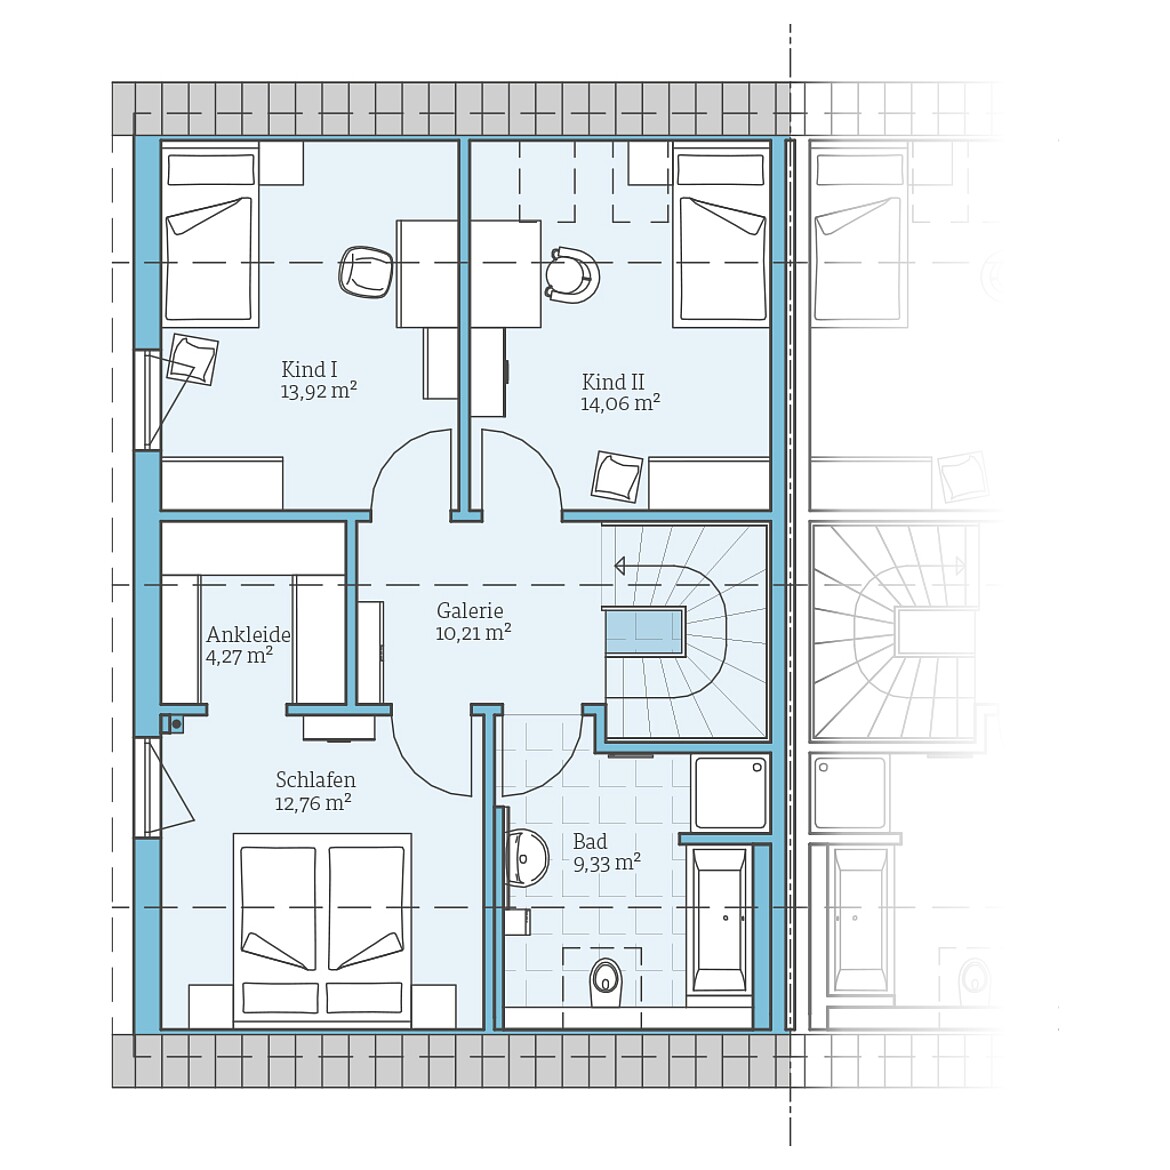 Prefabricated semi-detached house 35-130: Top floor plan